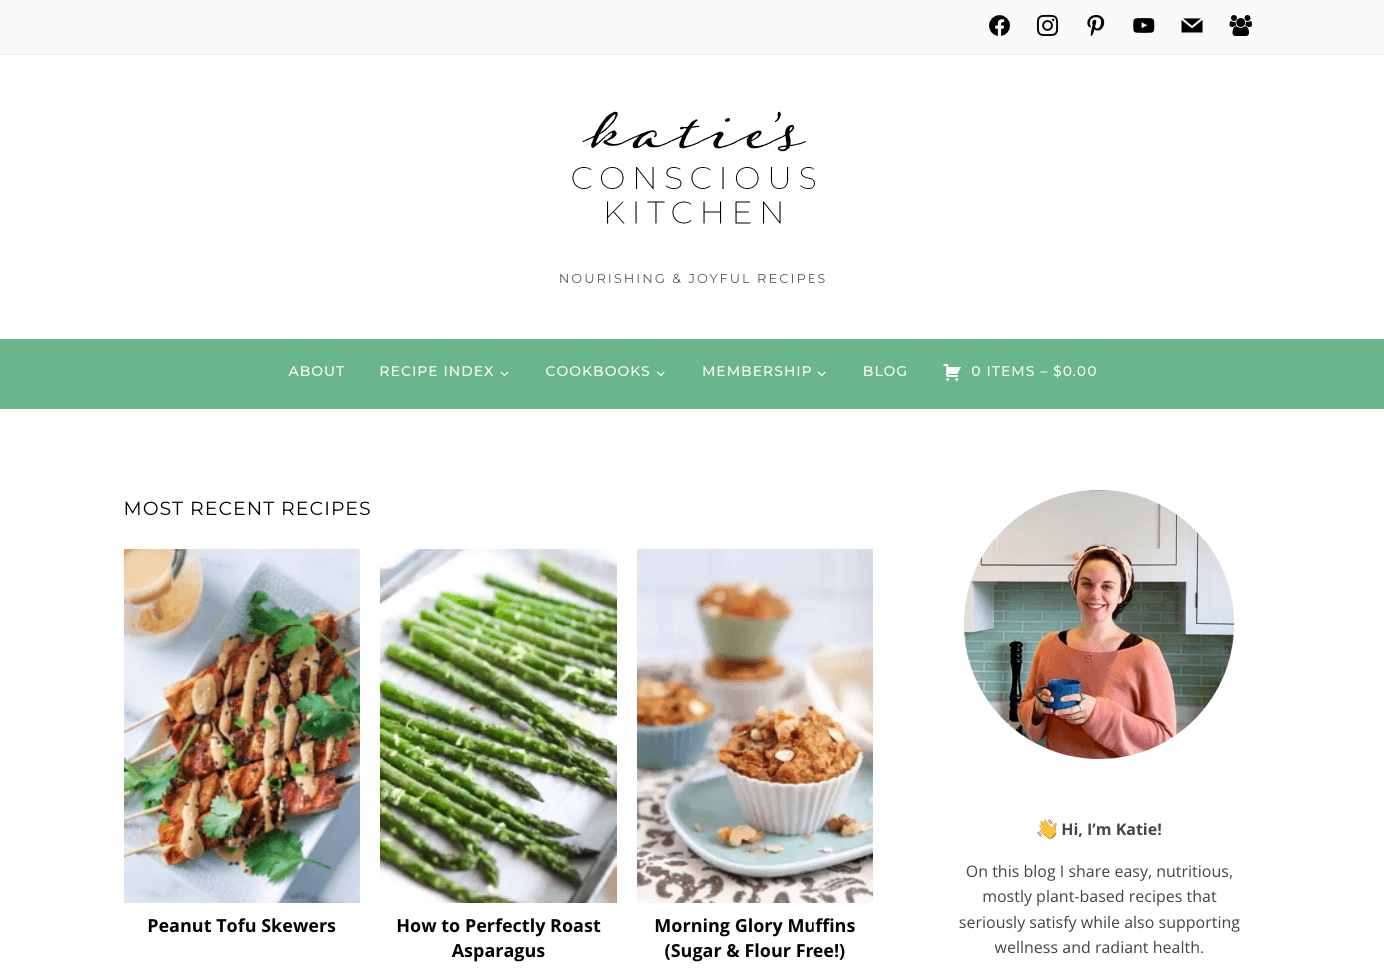 Katie's Conscious Kitchen food blog